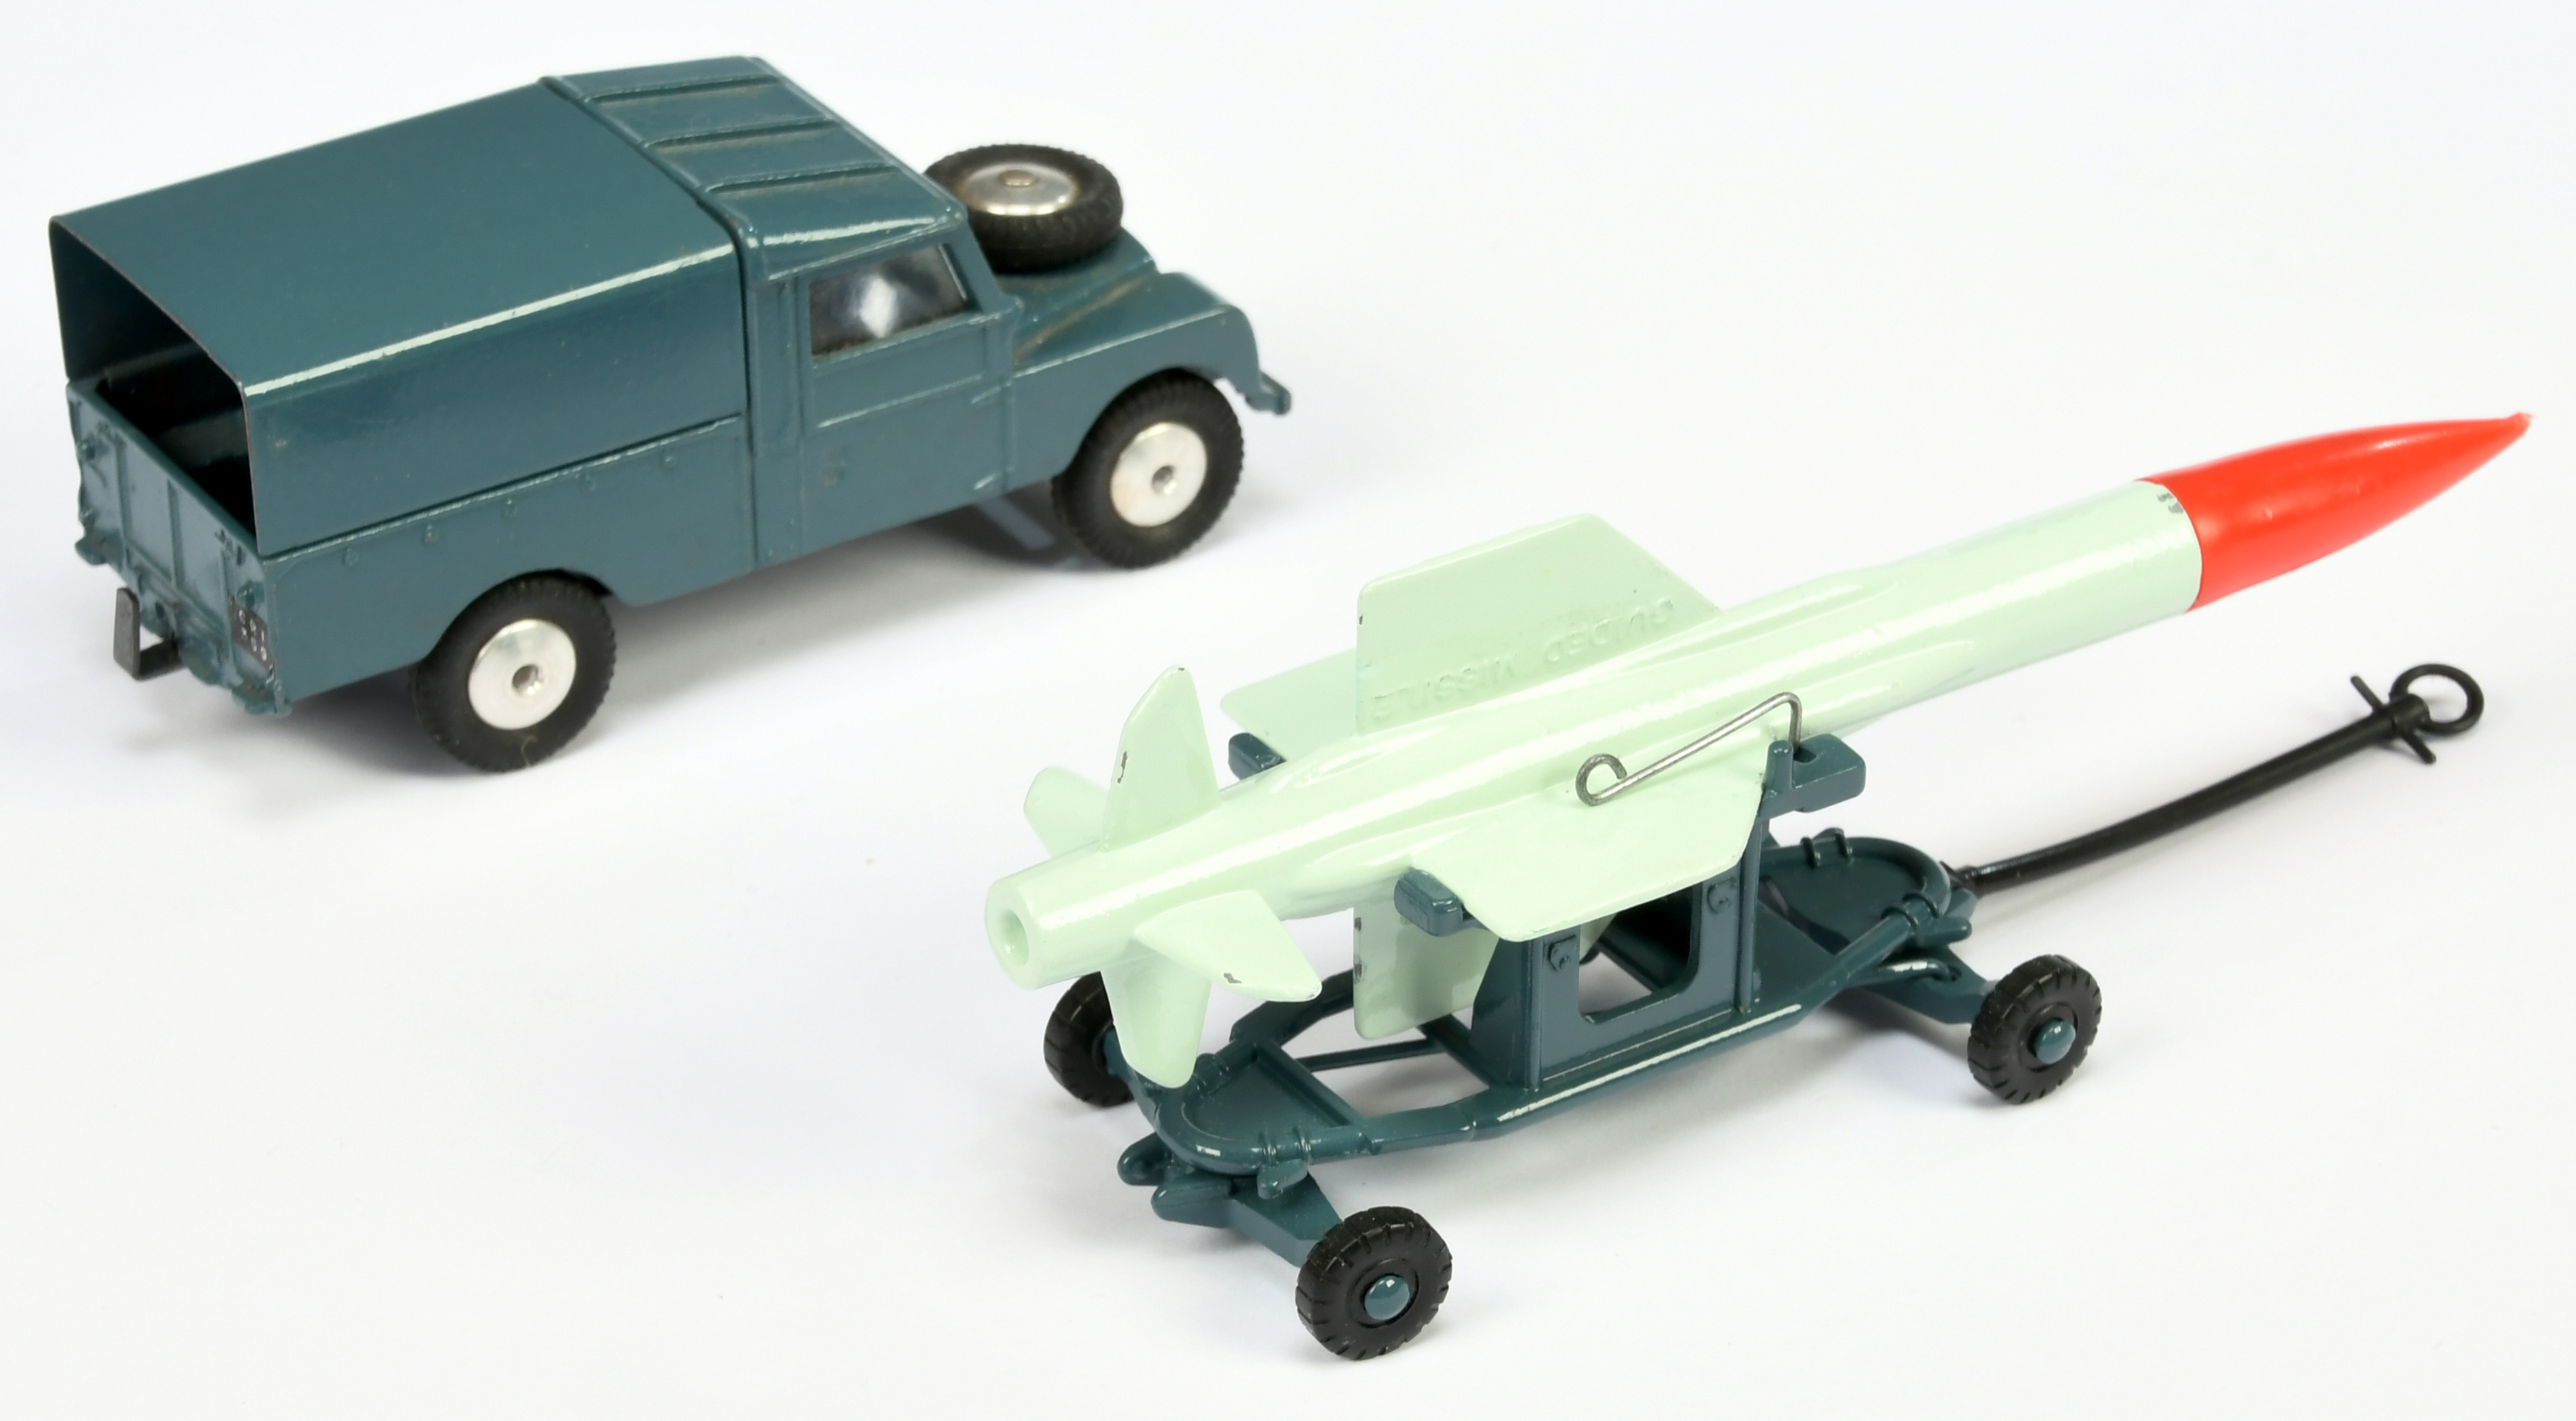 Corgi Toys GS 3 "RAF" Gift Set - Unboxed - Land Rover - Greyish-blue including tinplate tilt, fla... - Image 2 of 2